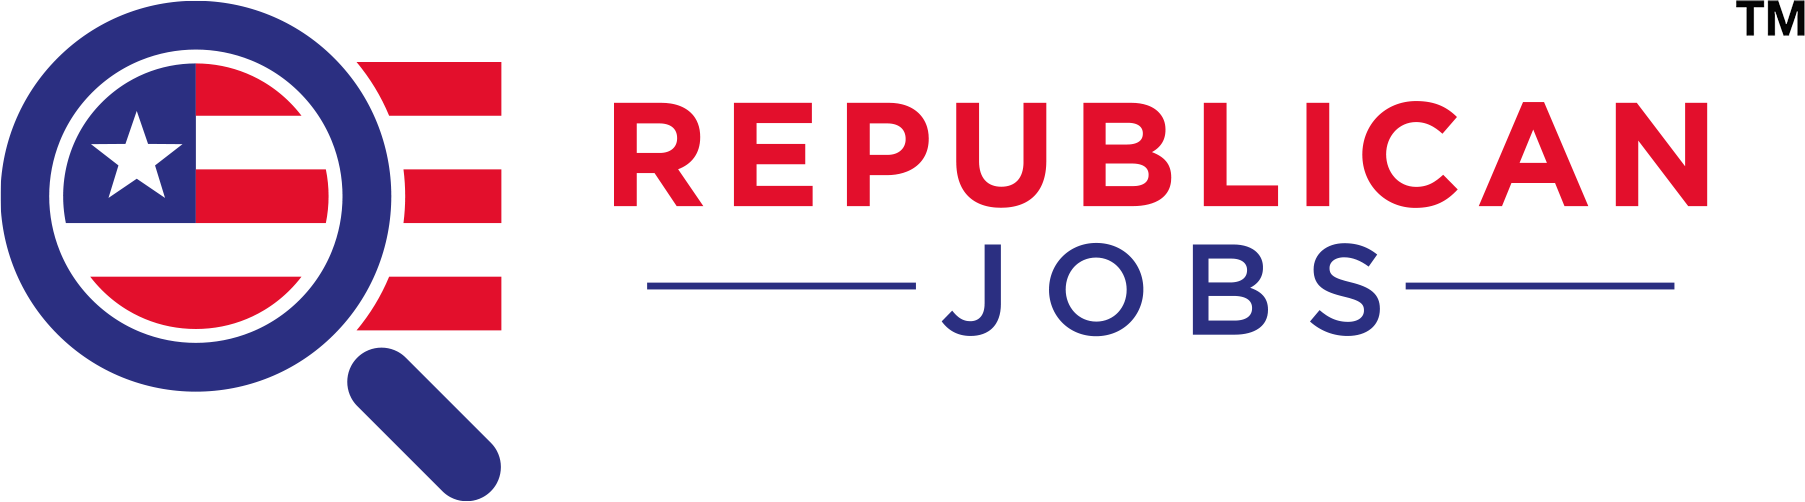 Republican jobs in Bloom Illinois jobs